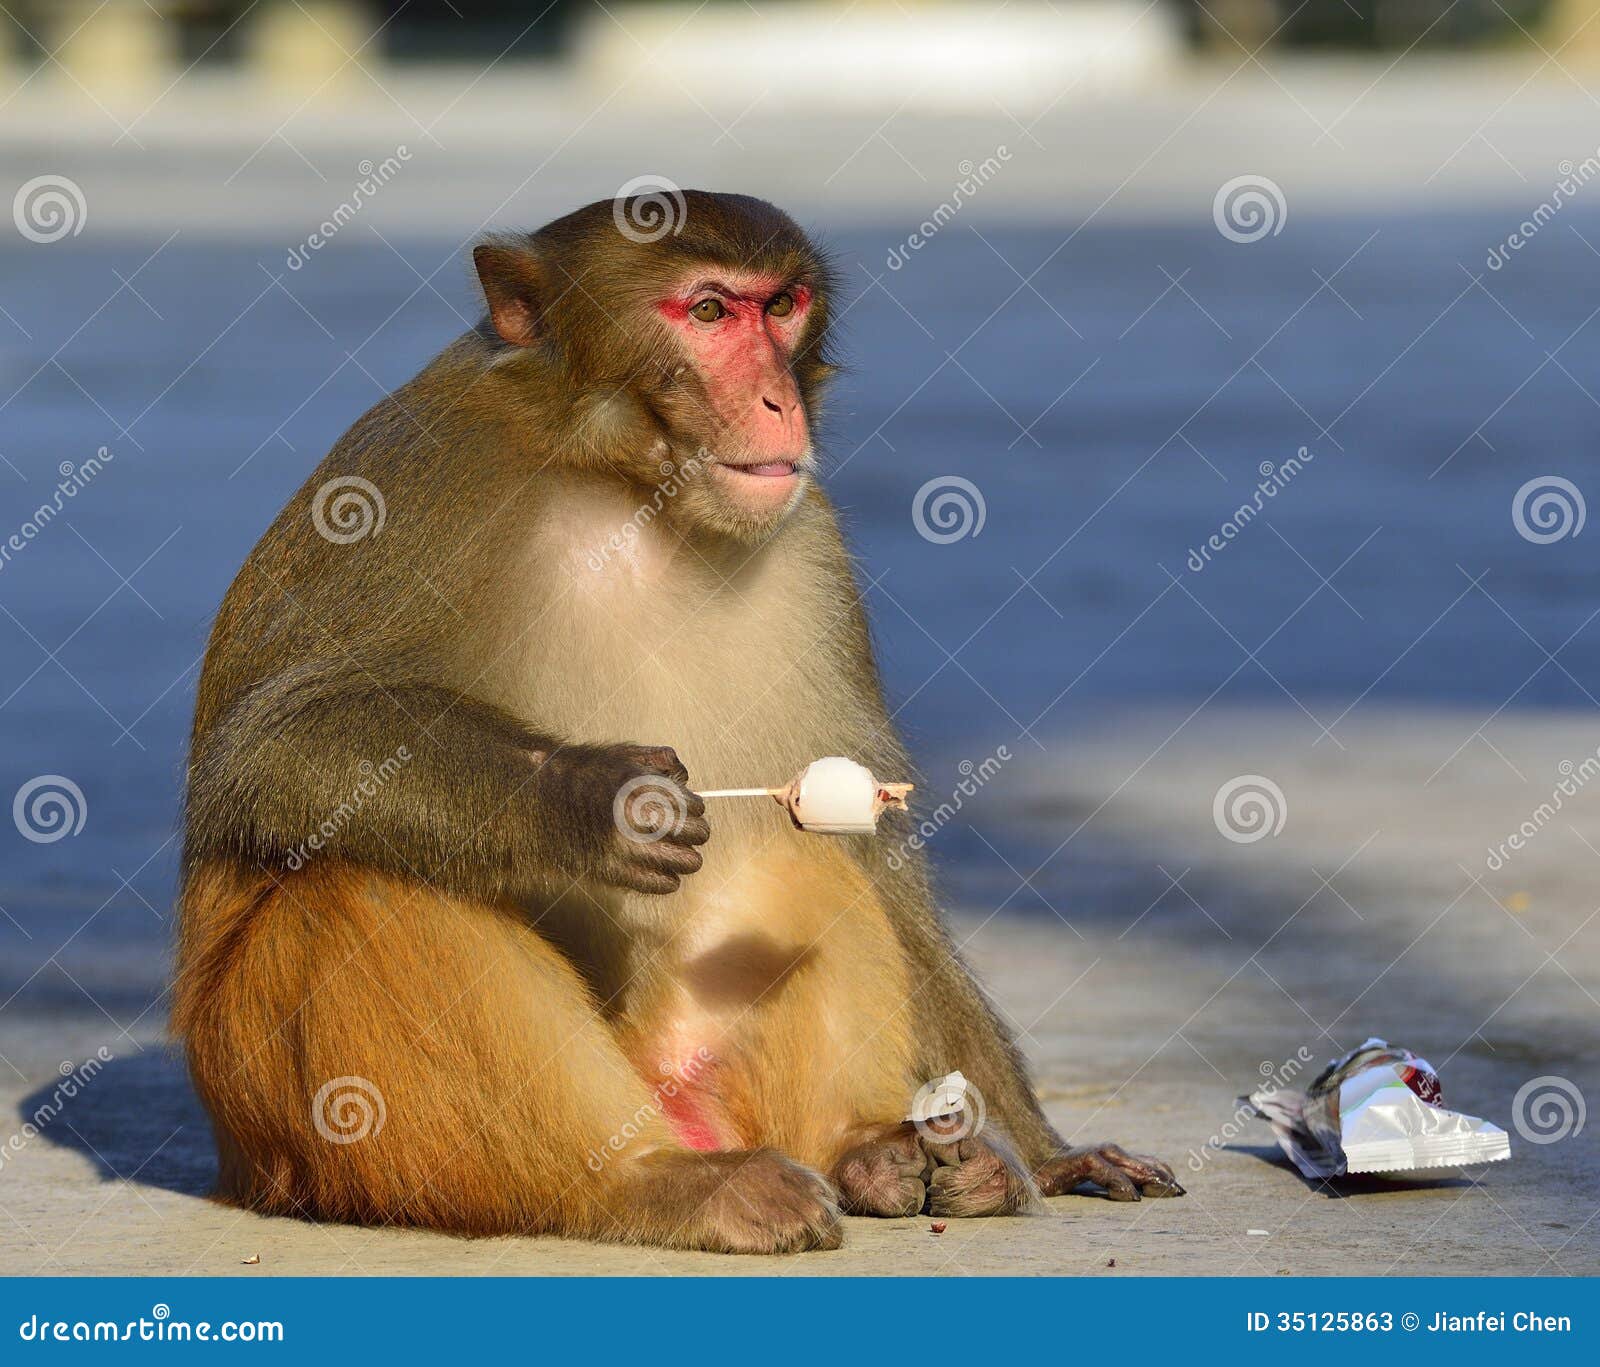 A Fat Monkey Esting Ice Cream Stock Photos - Image: 35125863